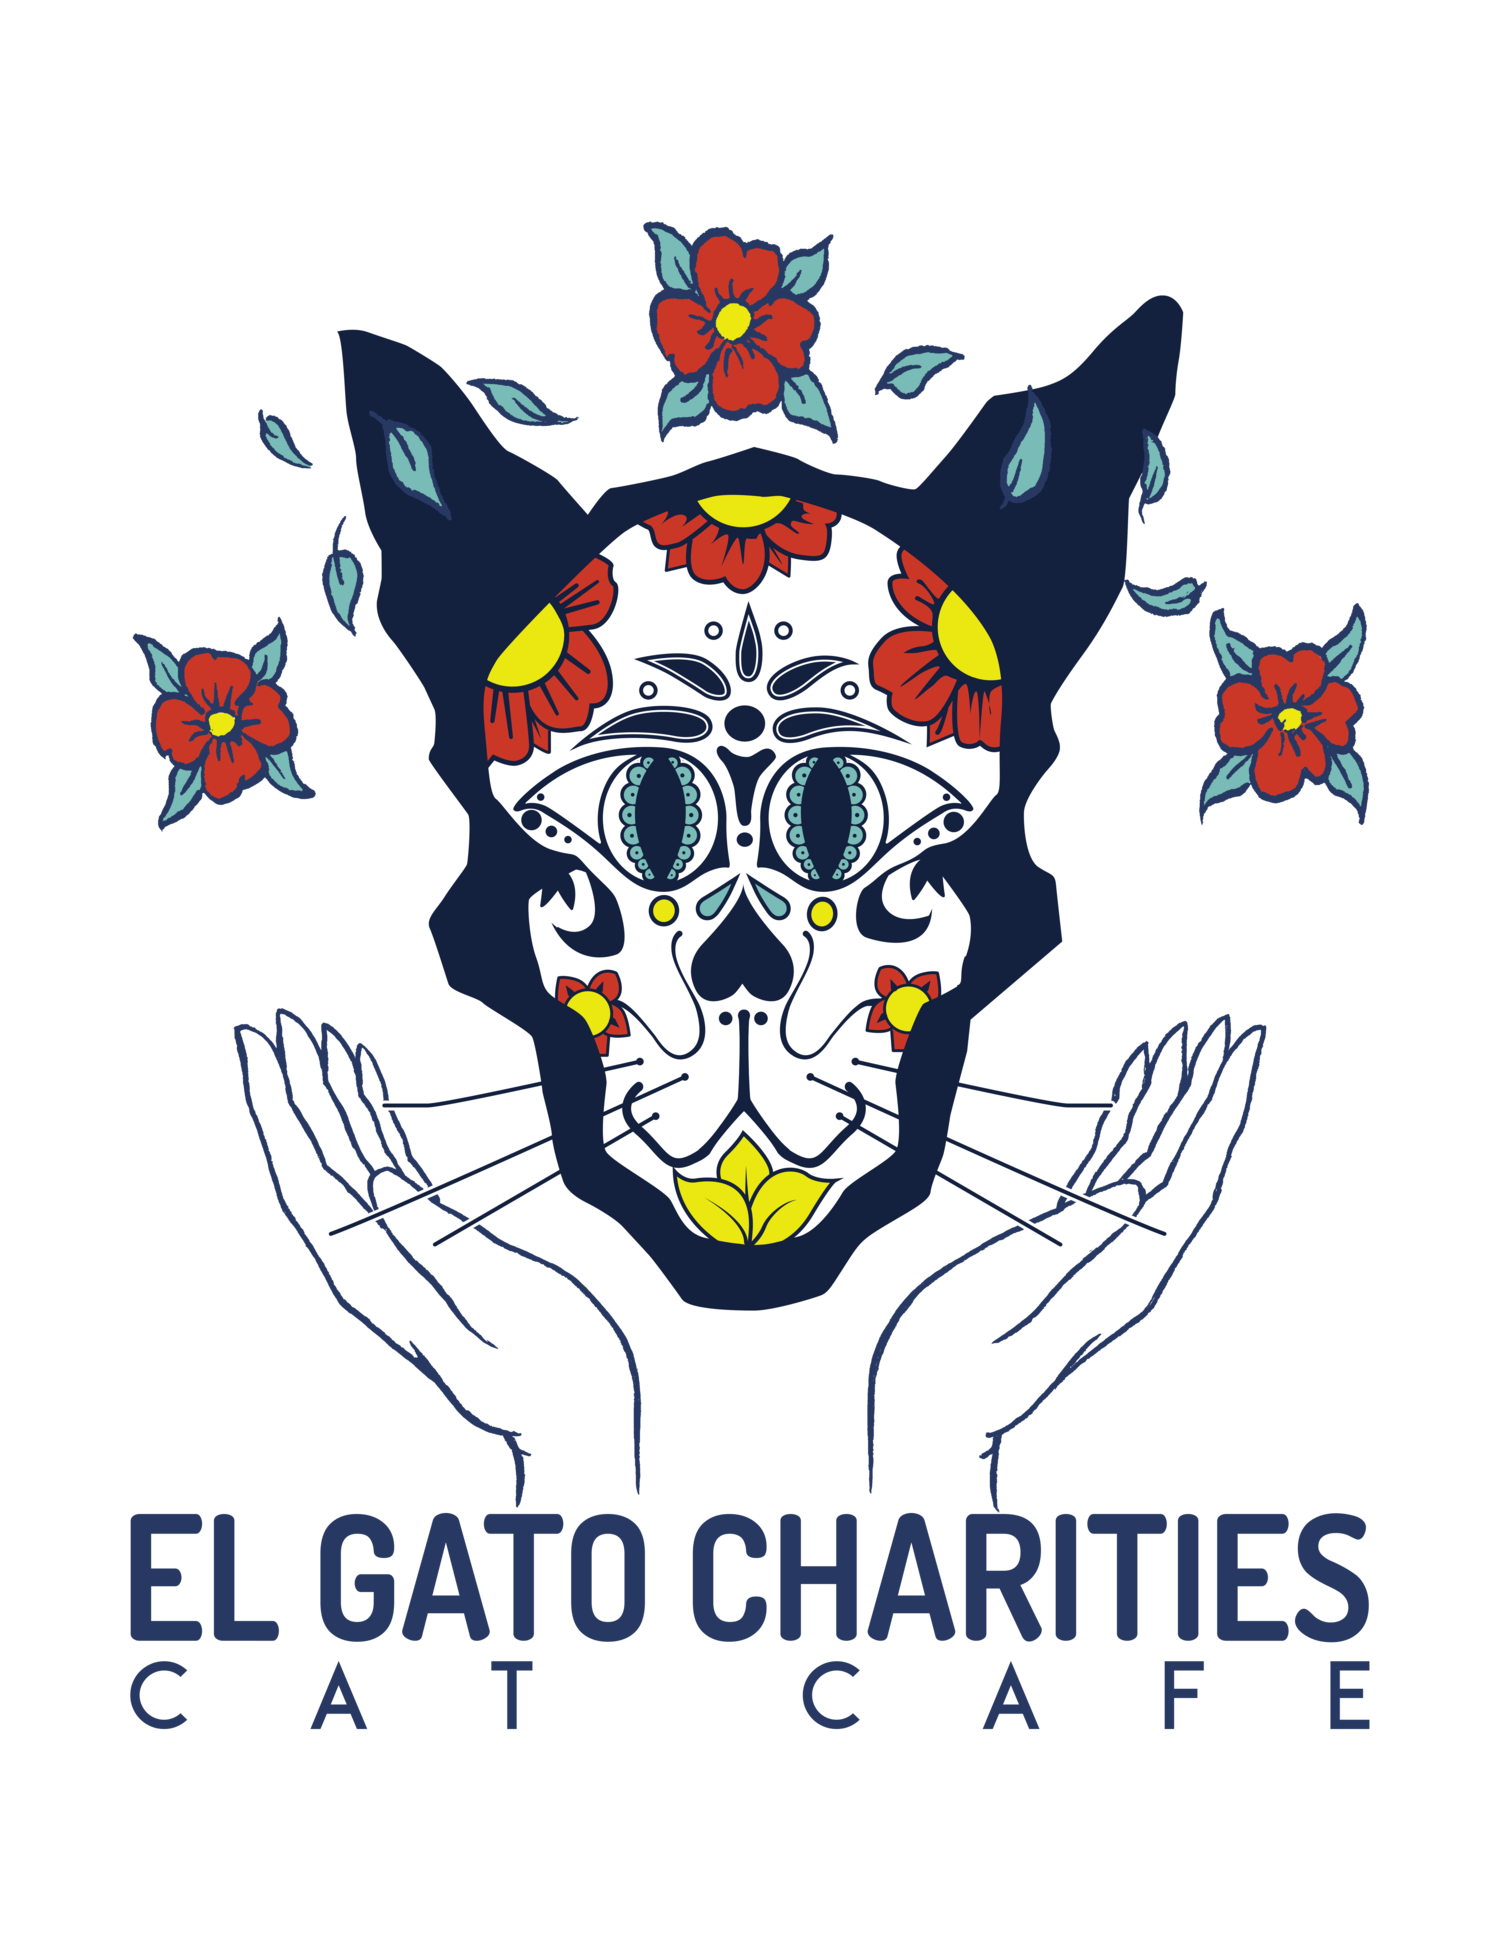 El Gato Charities